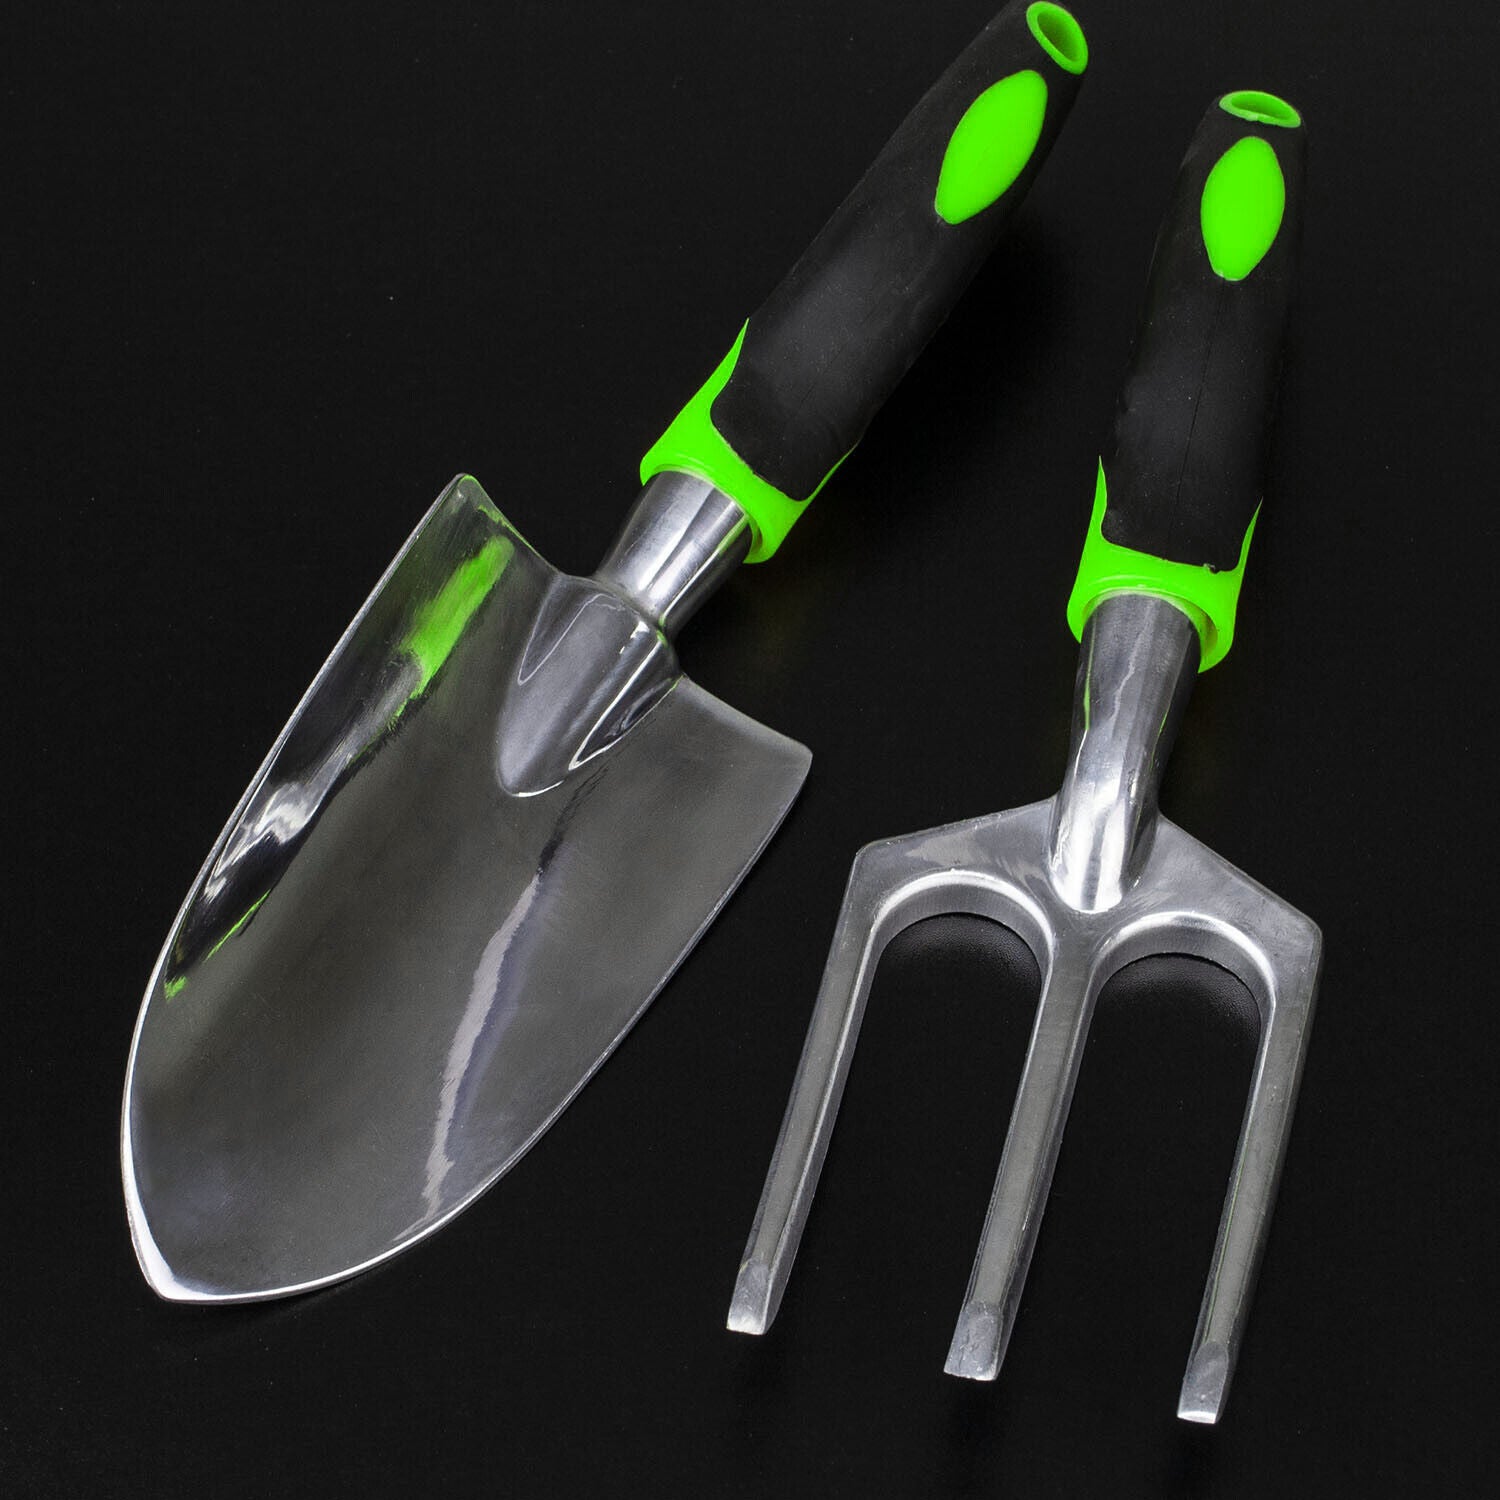 11 Piece Garden Tools Set with Bag Gardening Kit Trowel Secateurs Fork Knee Pad